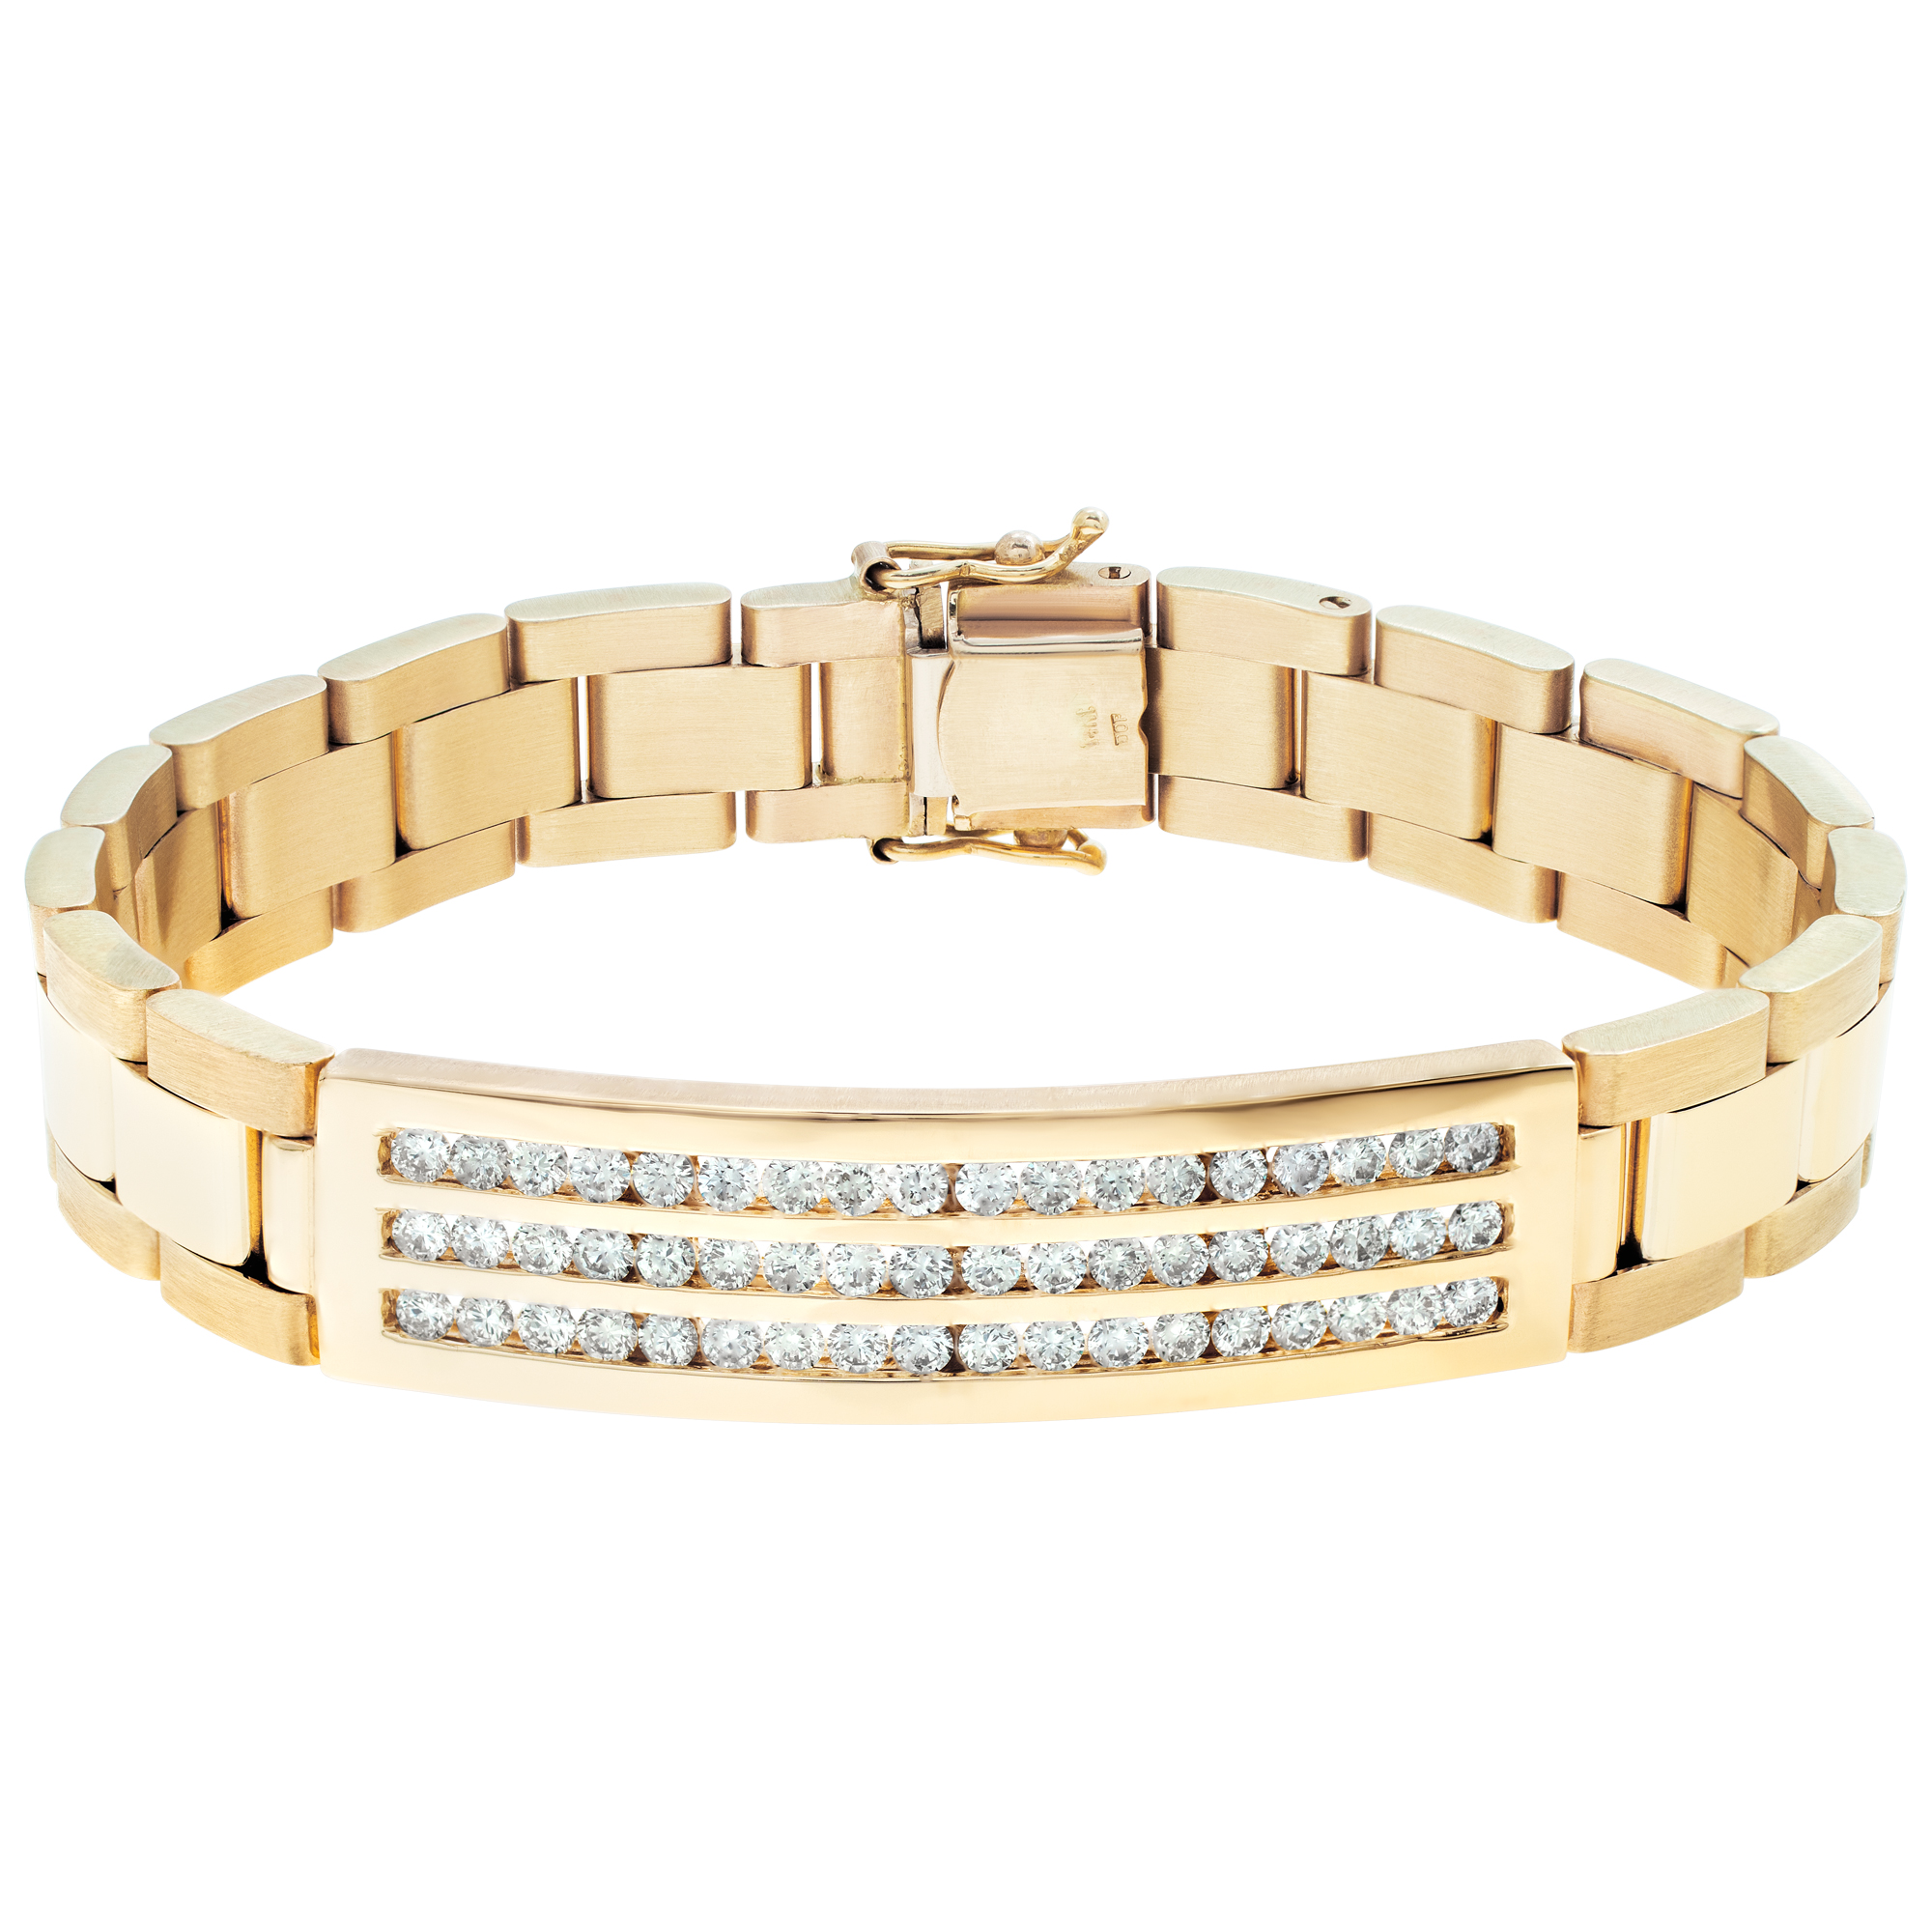 Mens link bracelet with diamonds set in 14k gold. 2.55 carats in diamonds